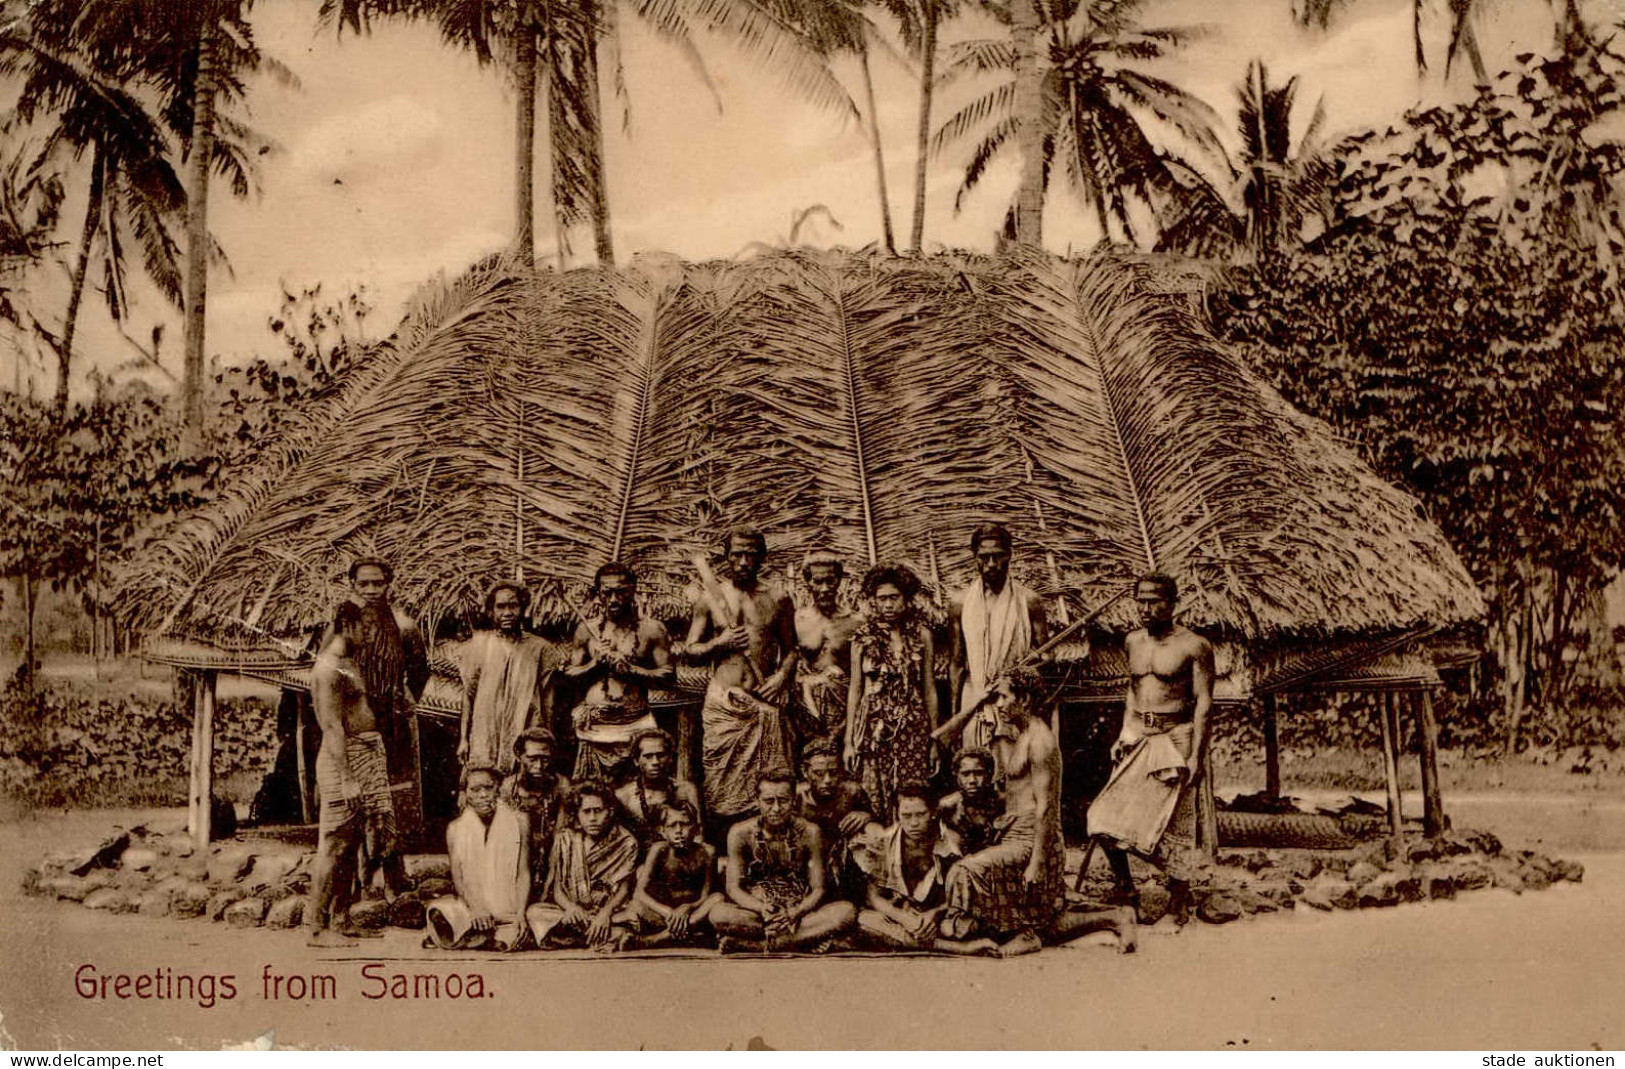 Kolonien Samoa Dorfgemeinde Stempel Apia 23.11.1911 I-II (Rand U. Abgestoßen) Colonies - History